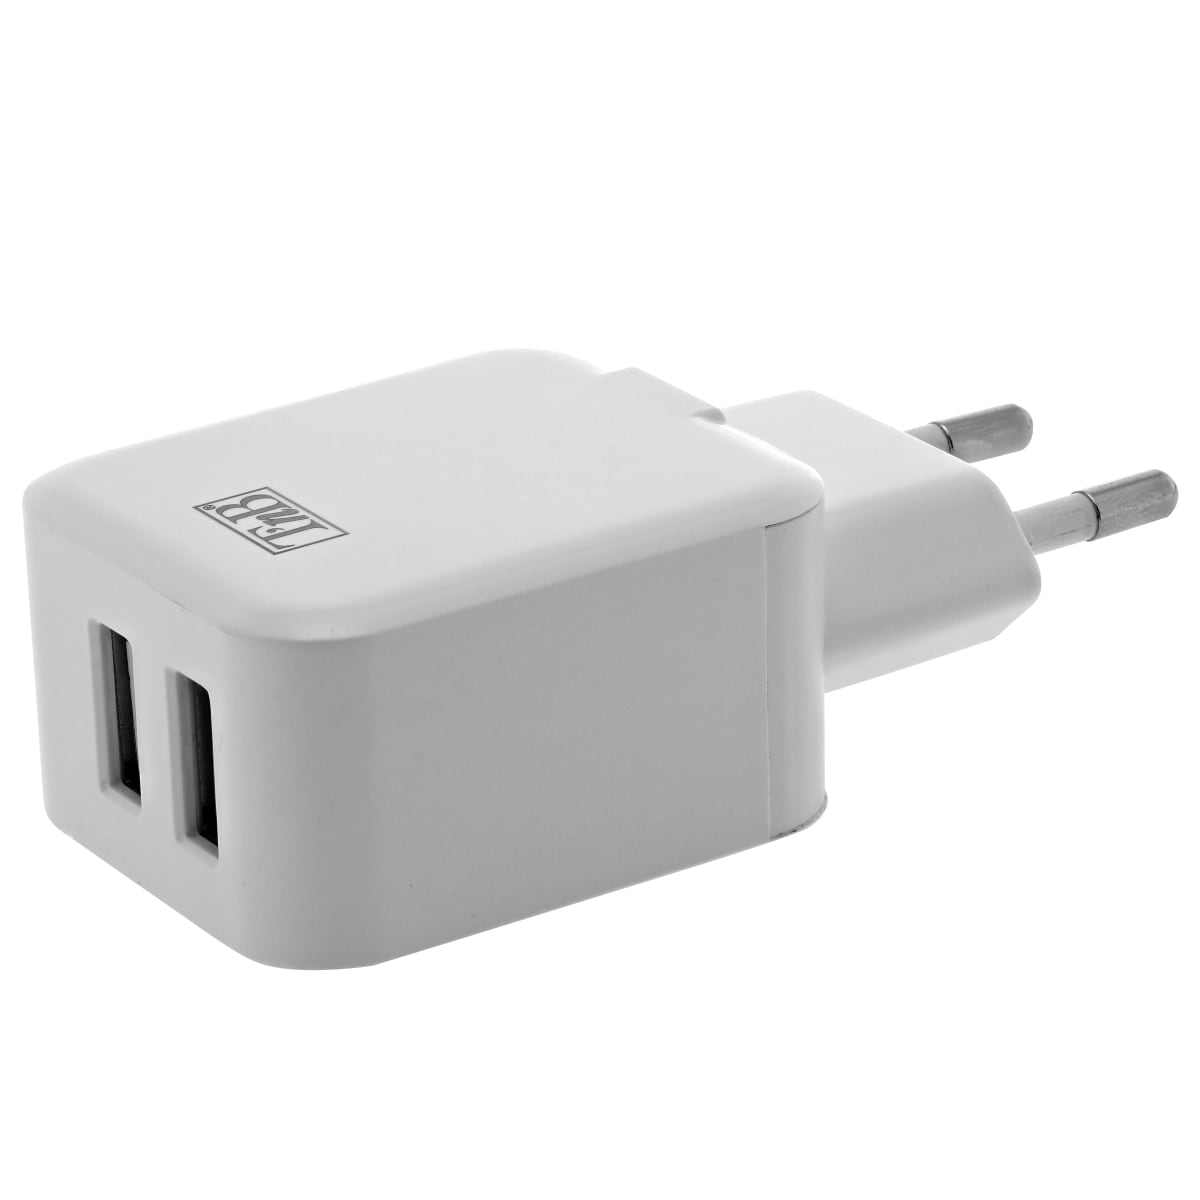 Procar® PUSB1B- QC-B Chargeur USB double charge Quick avec